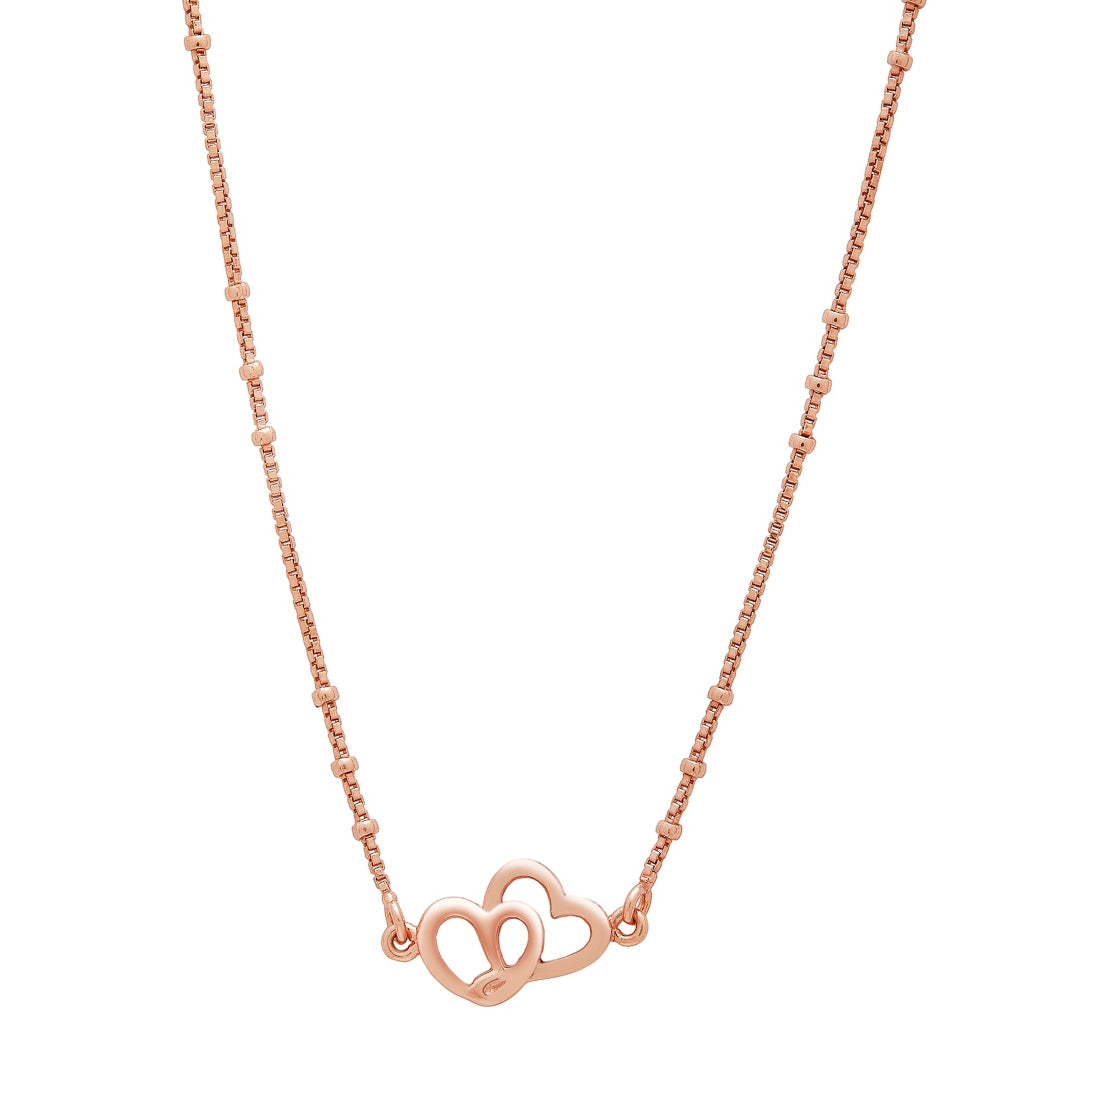 Heartfelt Affection Rose Gold-Plated 925 Sterling Silver Necklace